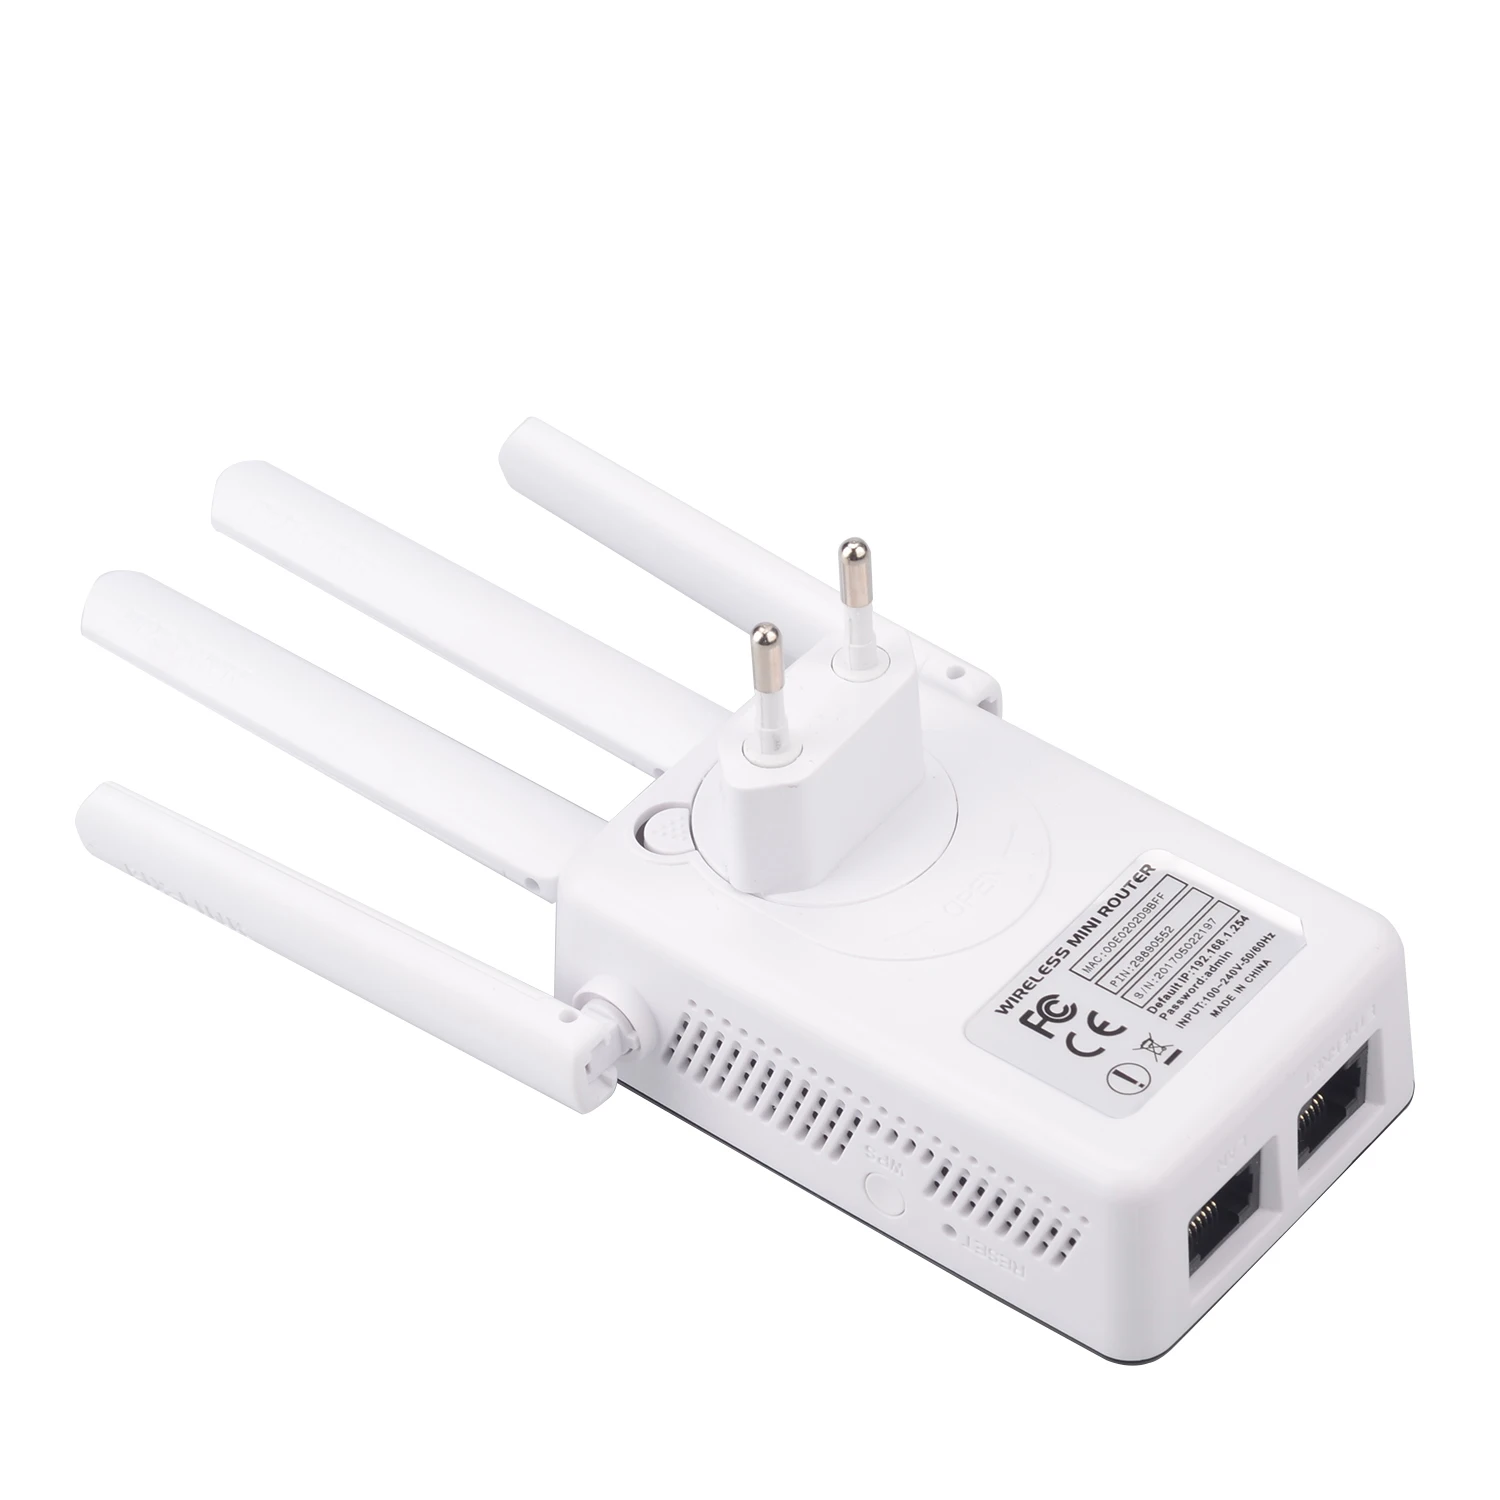 Pix-Link LV-WR09 300Mbps Range WiFi Extender Repeater Mini Router (AU